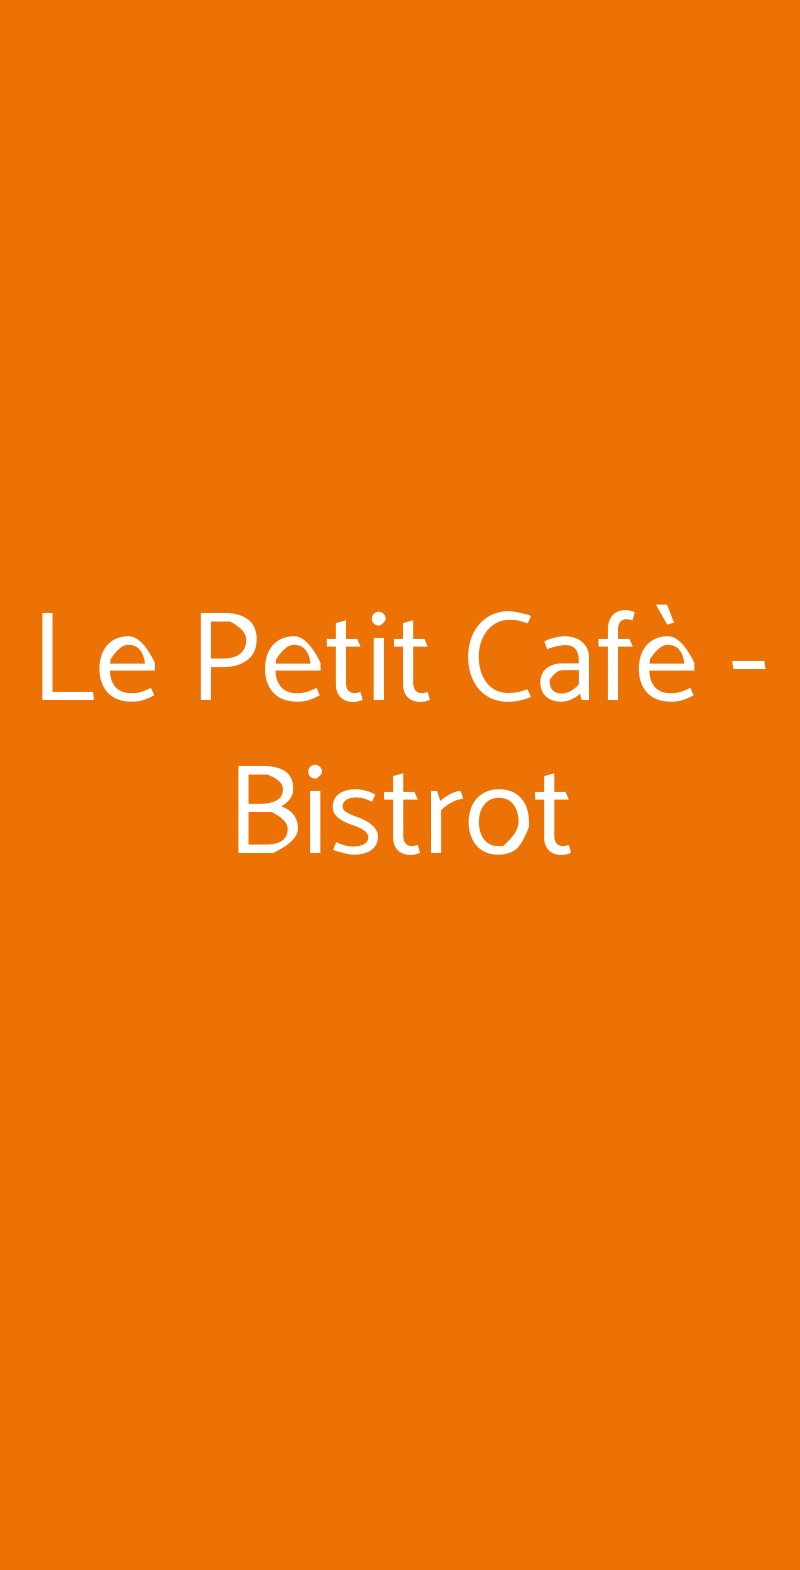 Le Petit Cafè - Bistrot Fiumicino menù 1 pagina